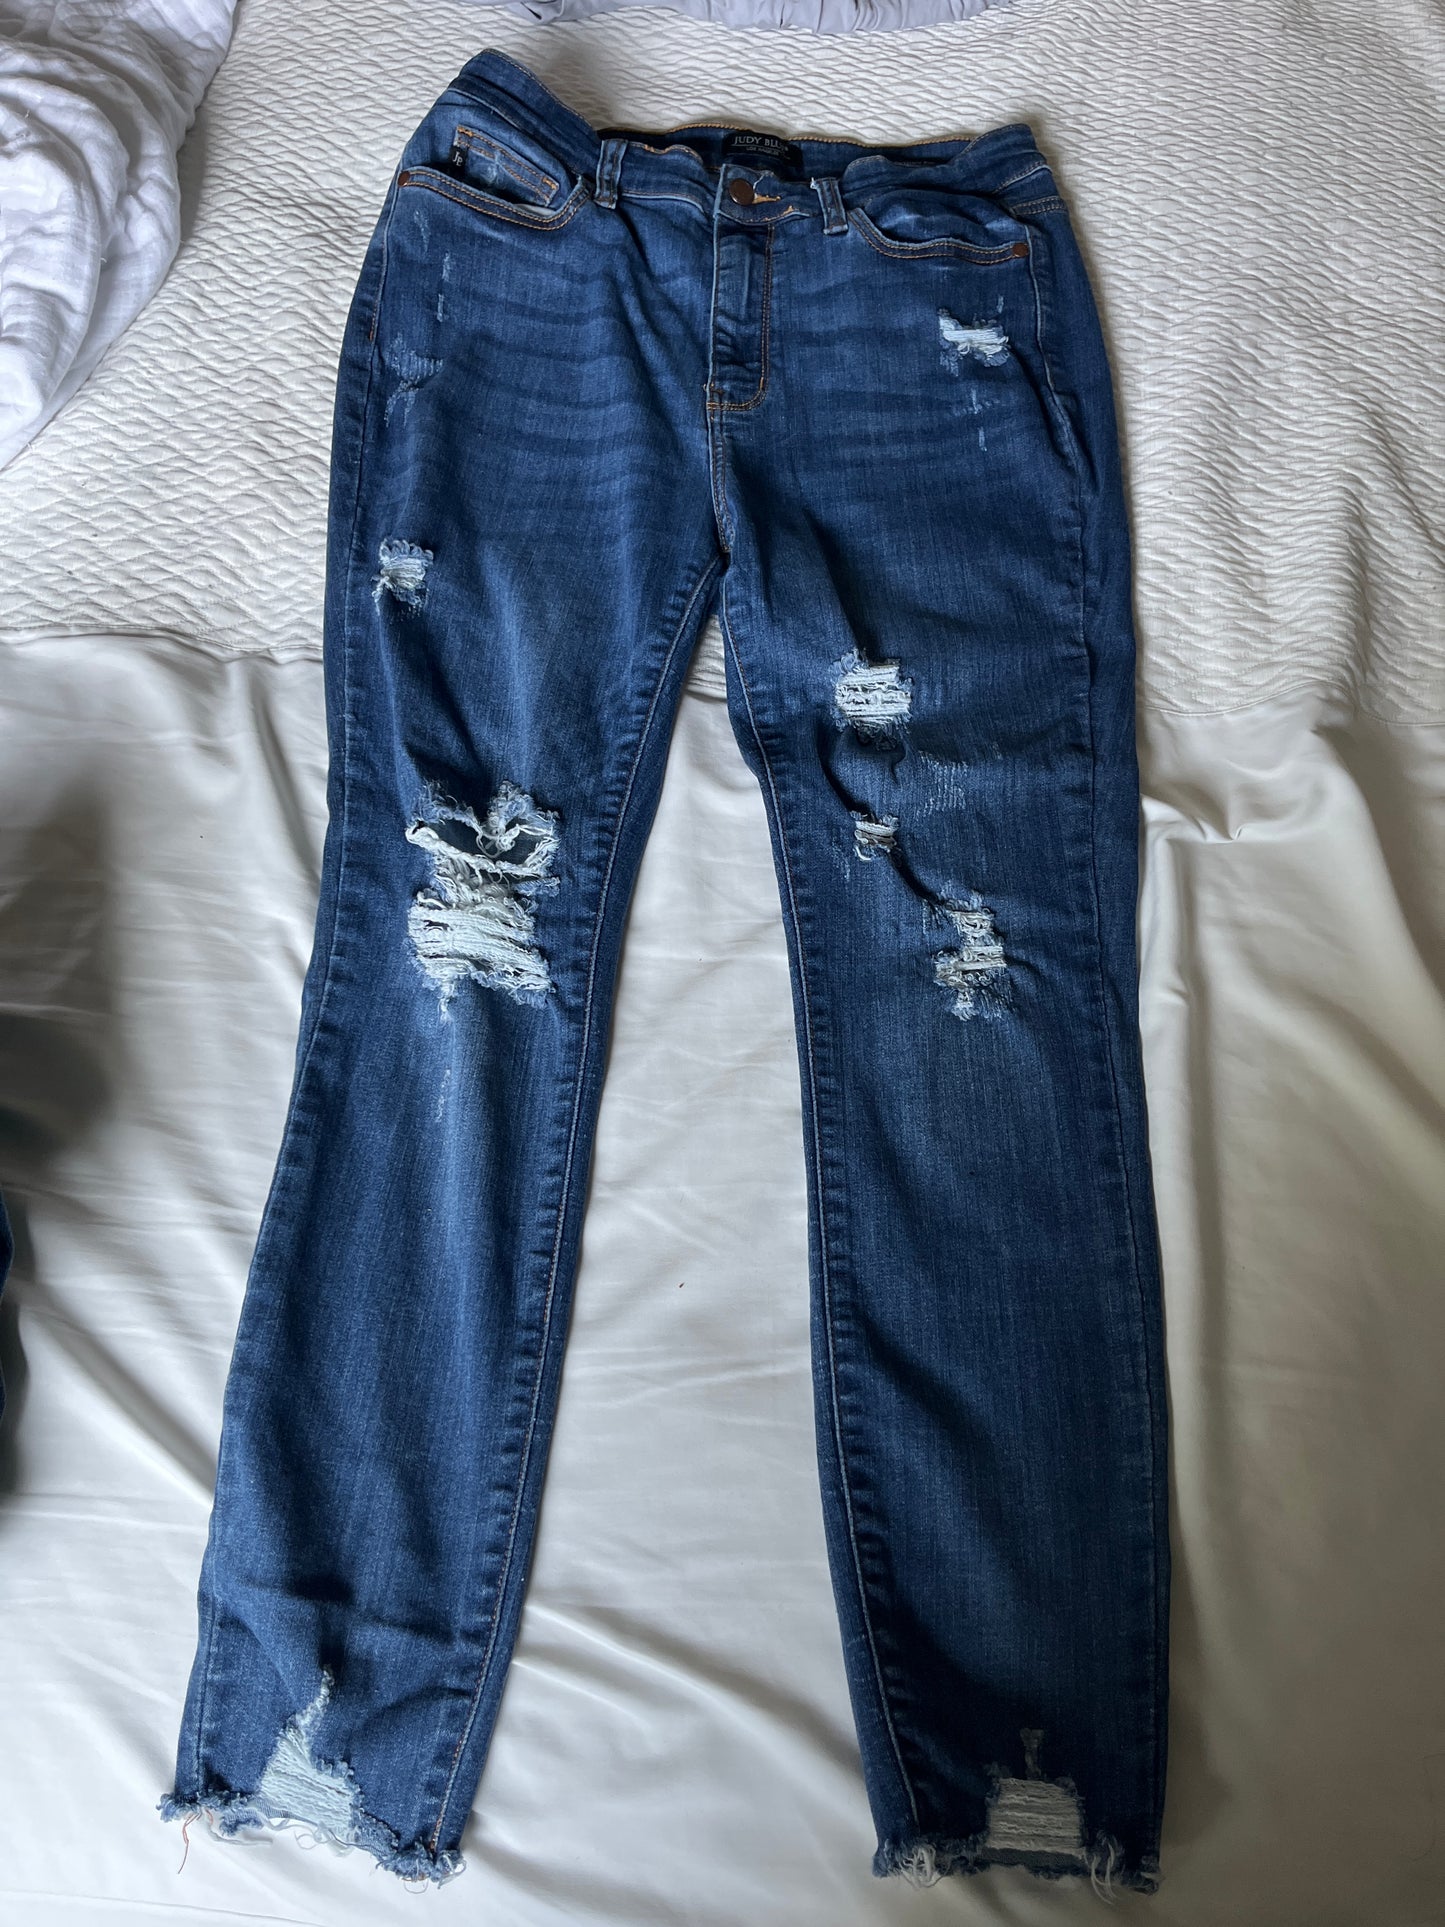 13/31 Judy Blue skinny jeans